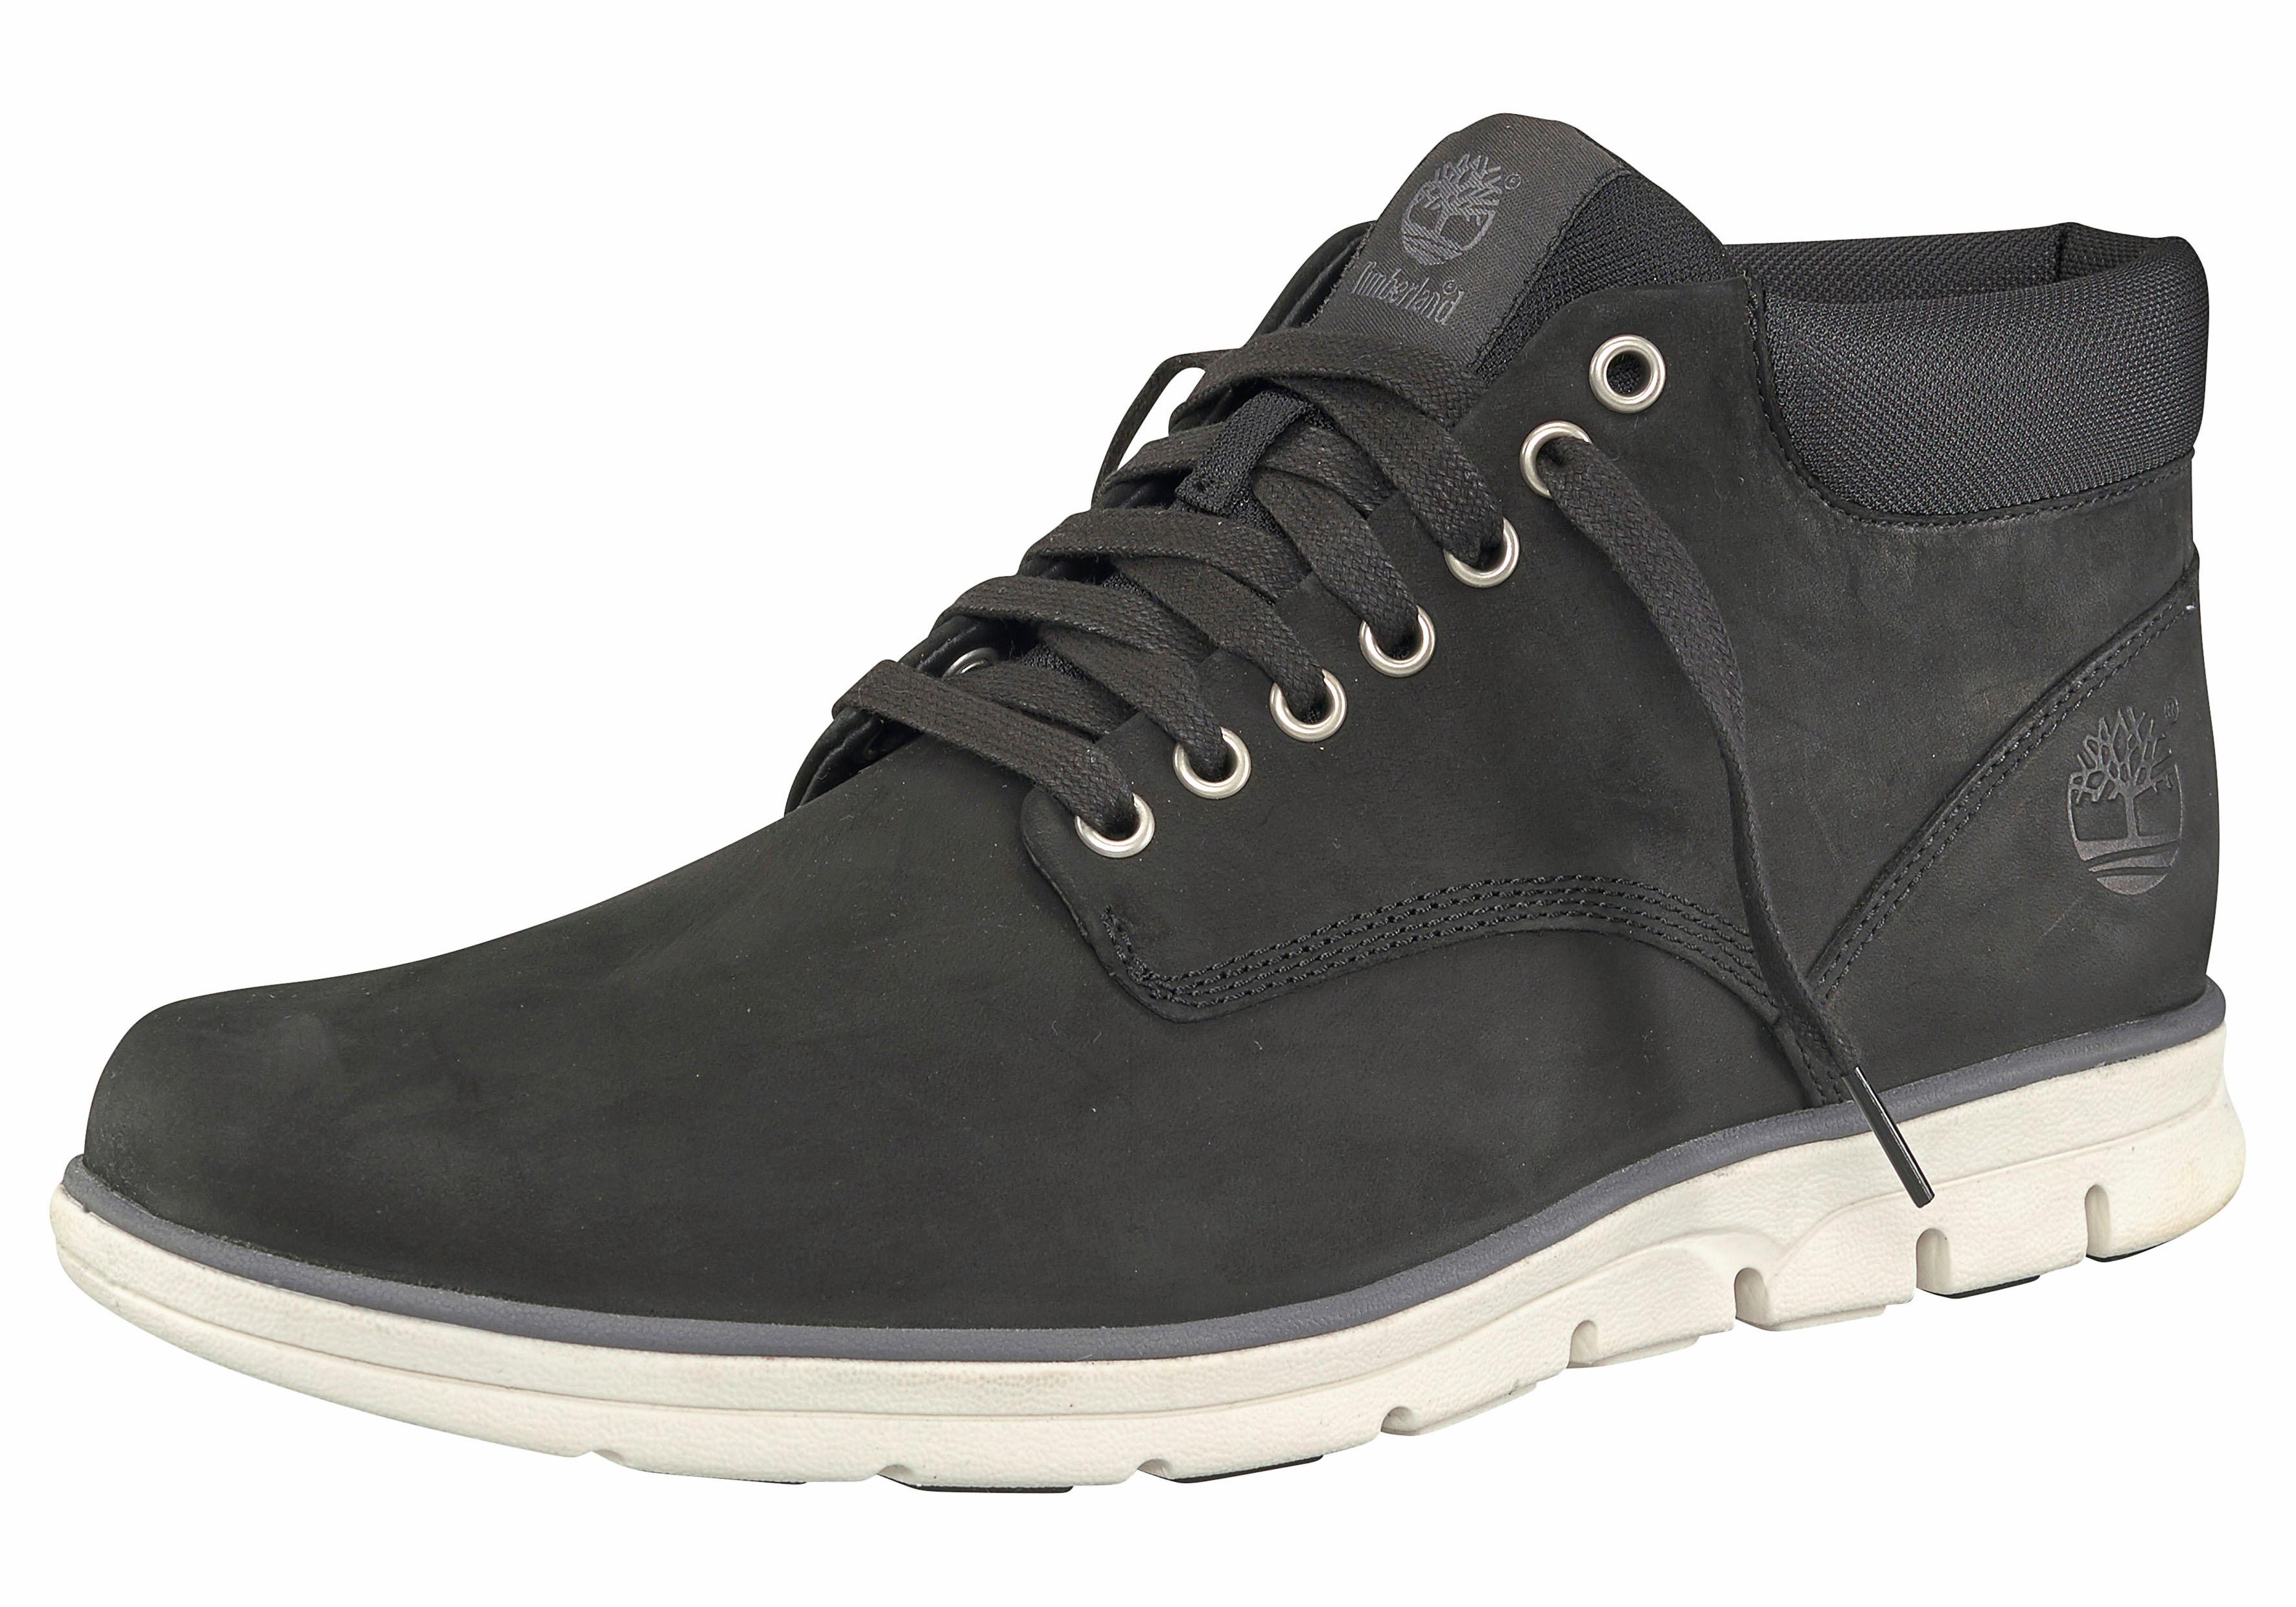 Timberland Herren Bradstreet Leather Sensorflex Chukka Boots, Grau (Steeple Grey Mjf), 41 EU